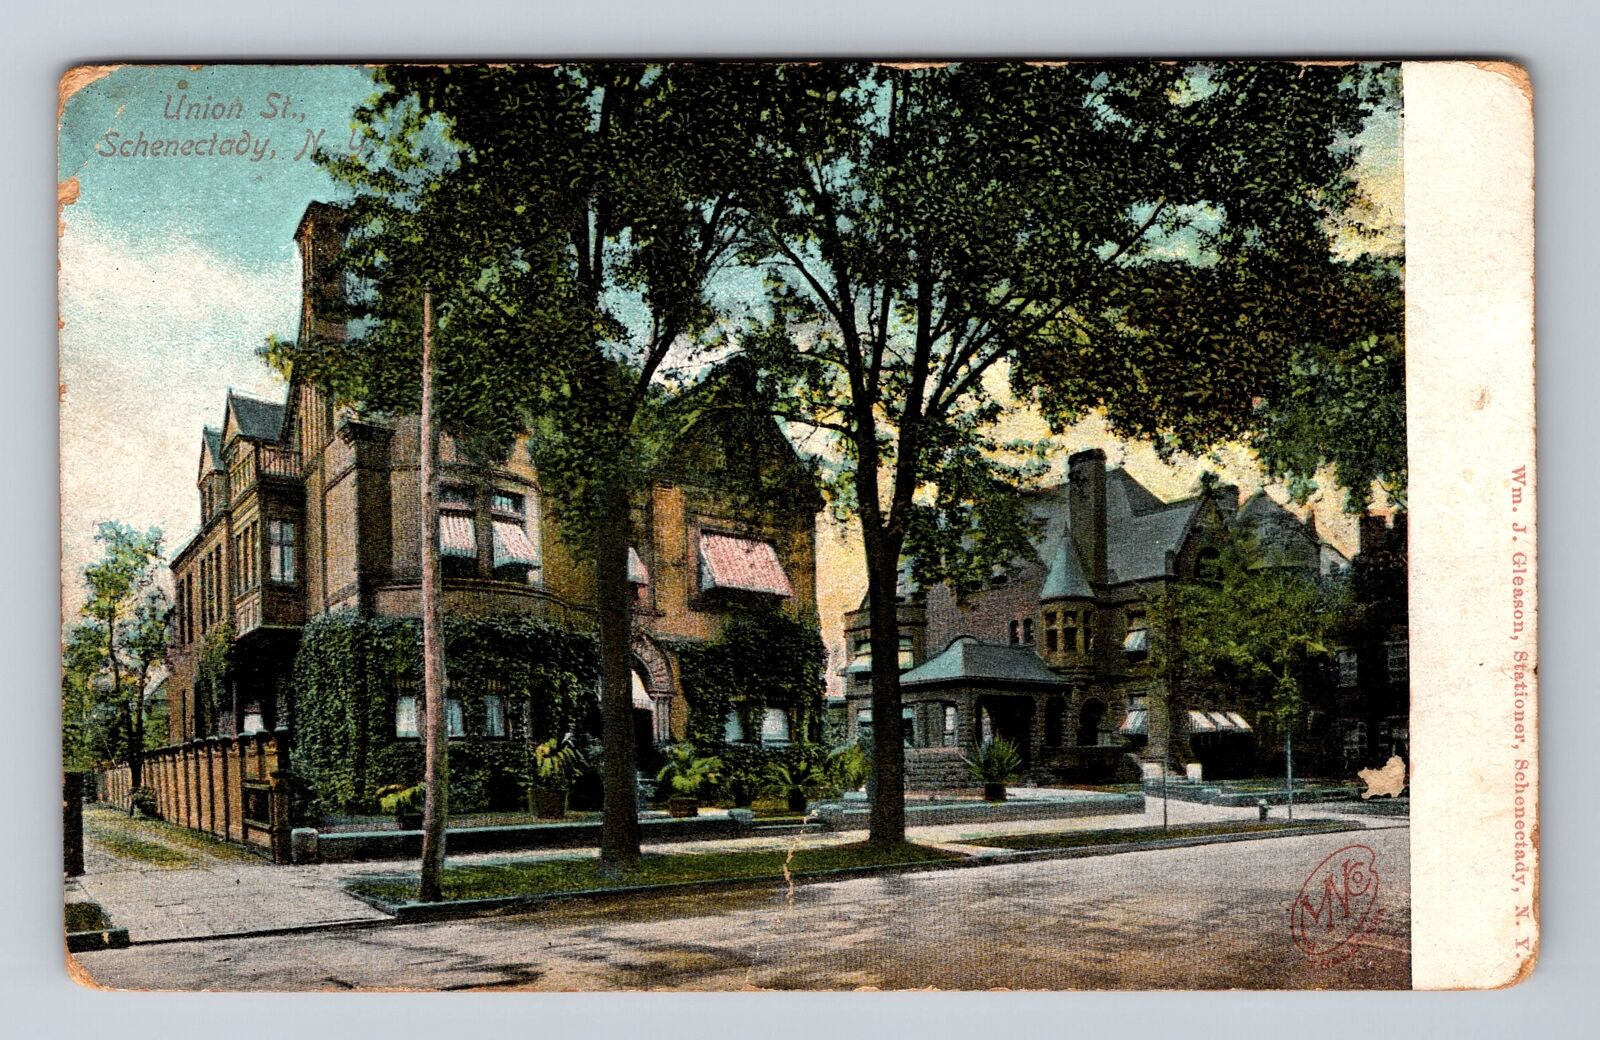 Schenectady NY-New York, Union St, Antique, Souvenir Vintage Postcard